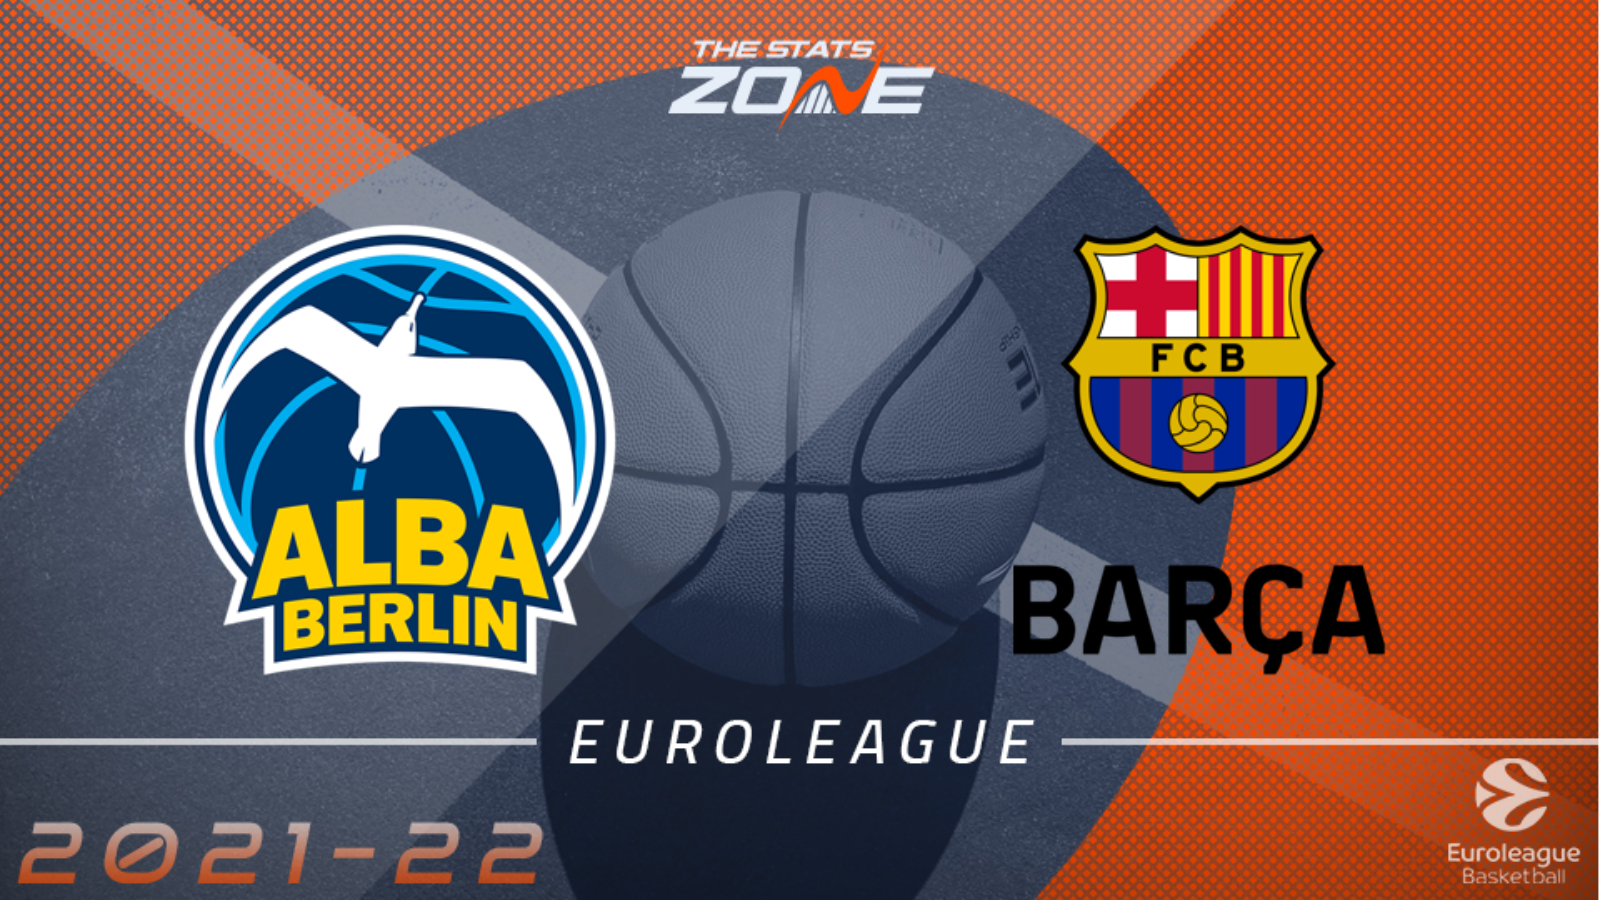 ALBA Berlin vs FC Barcelona Preview and Prediction